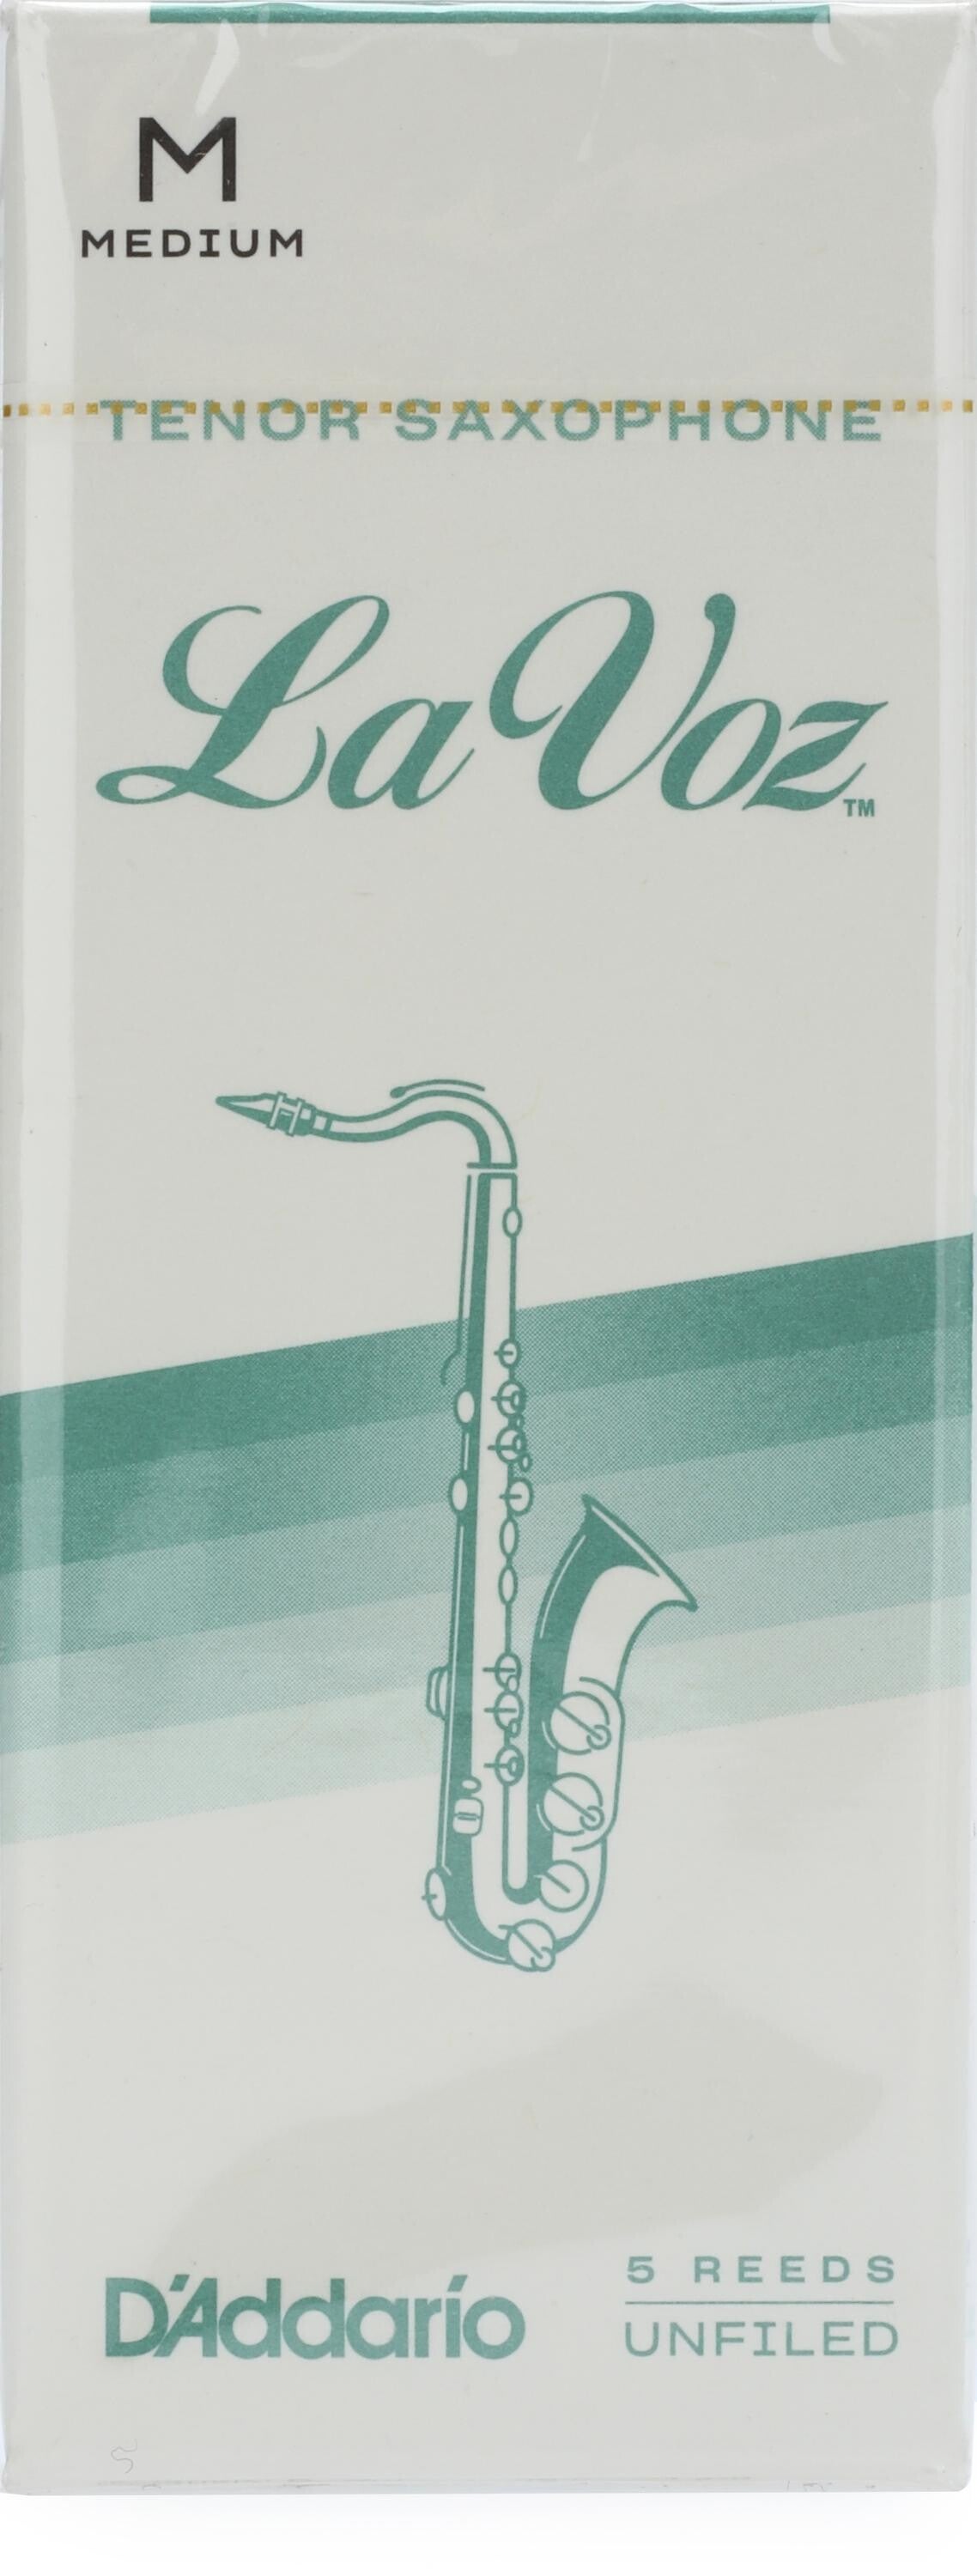 La Voz Tenor Saxophone Reeds, Woodwinds